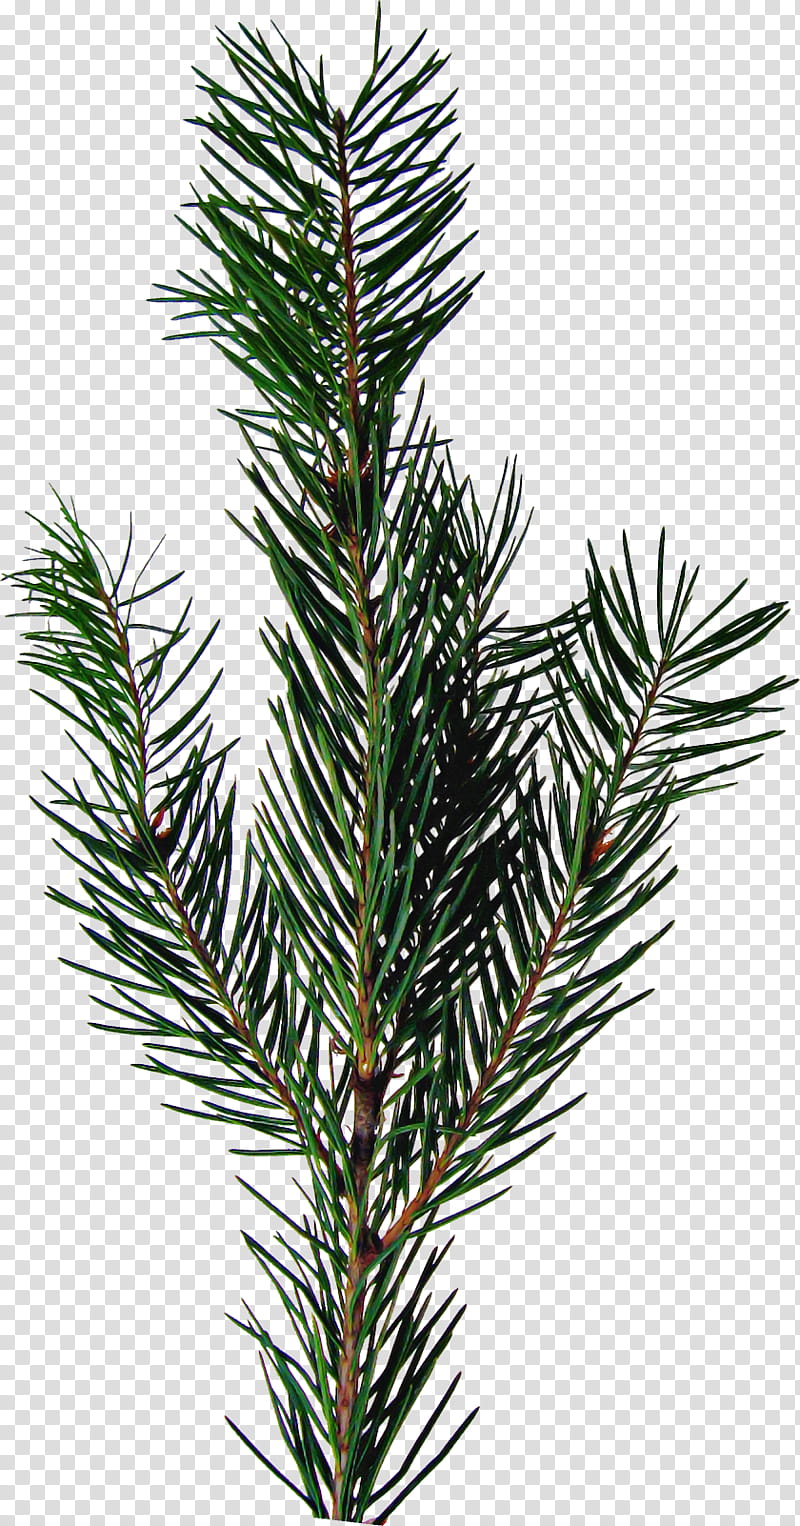 Rosemary, Shortleaf Black Spruce, Columbian Spruce, Balsam Fir, Sugar Pine, Jack Pine, White Pine, Yellow Fir transparent background PNG clipart